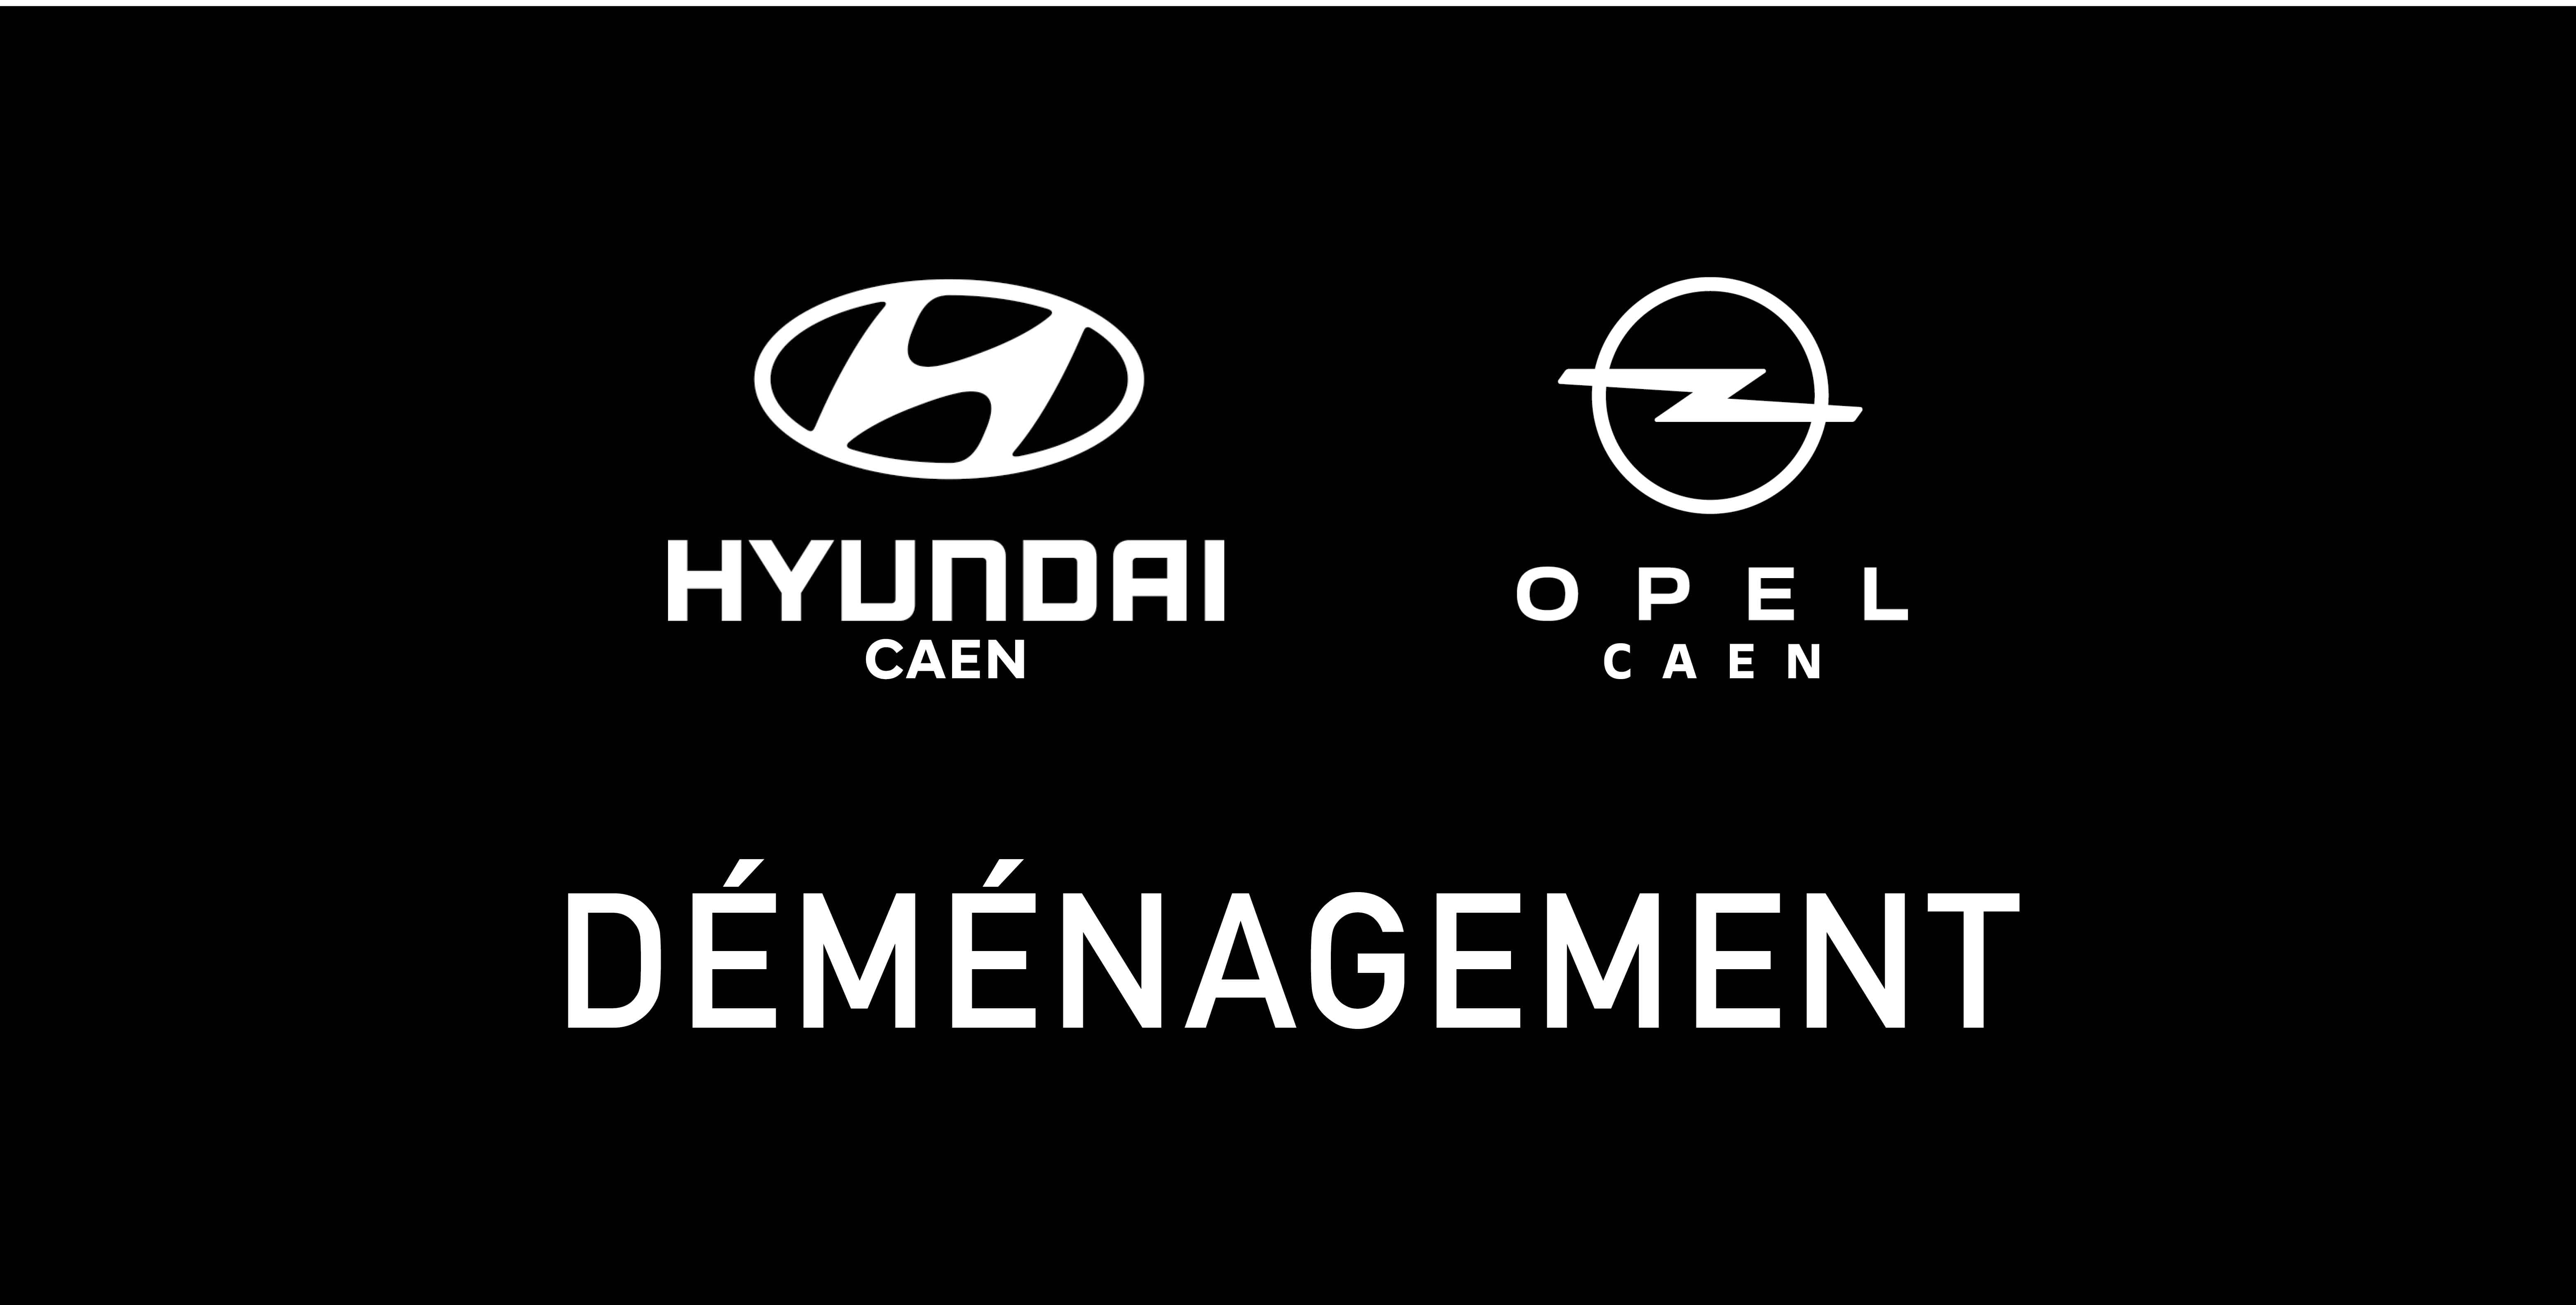 Vos concessions Hyundai Caen et Opel Caen déménagent.